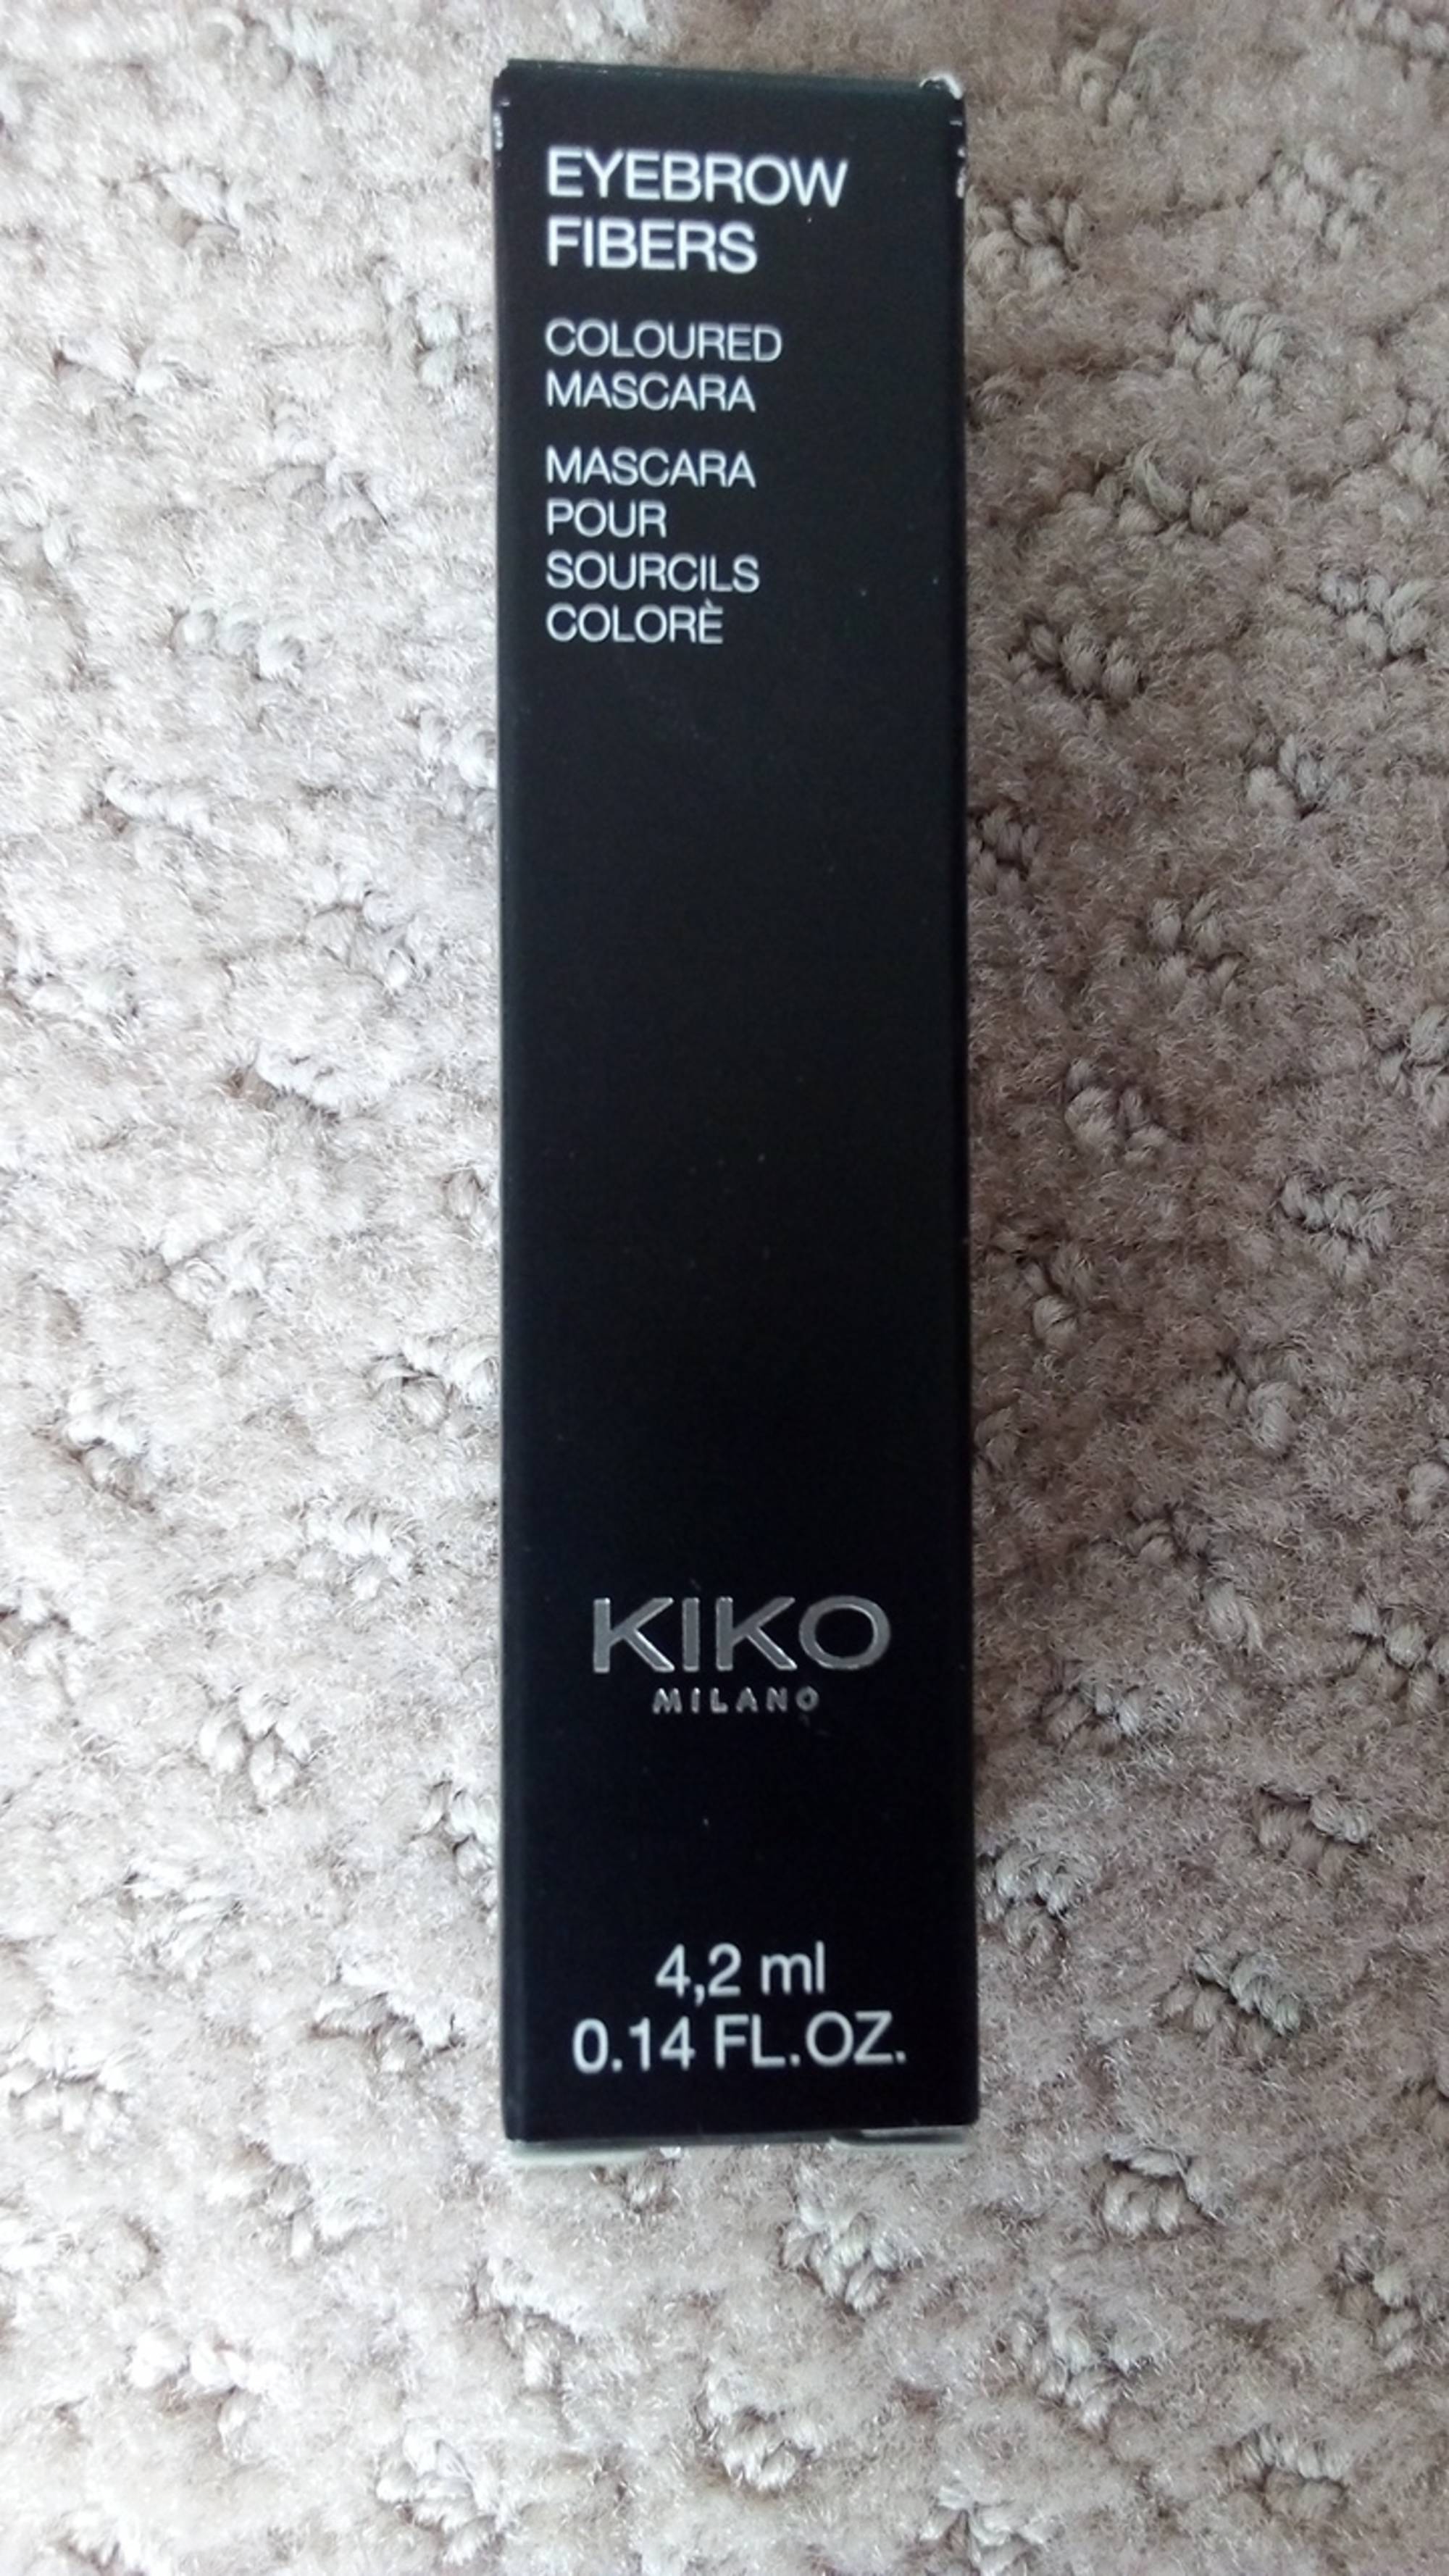 KIKO - Eyebrow fibers - Mascara pour sourcils coloré